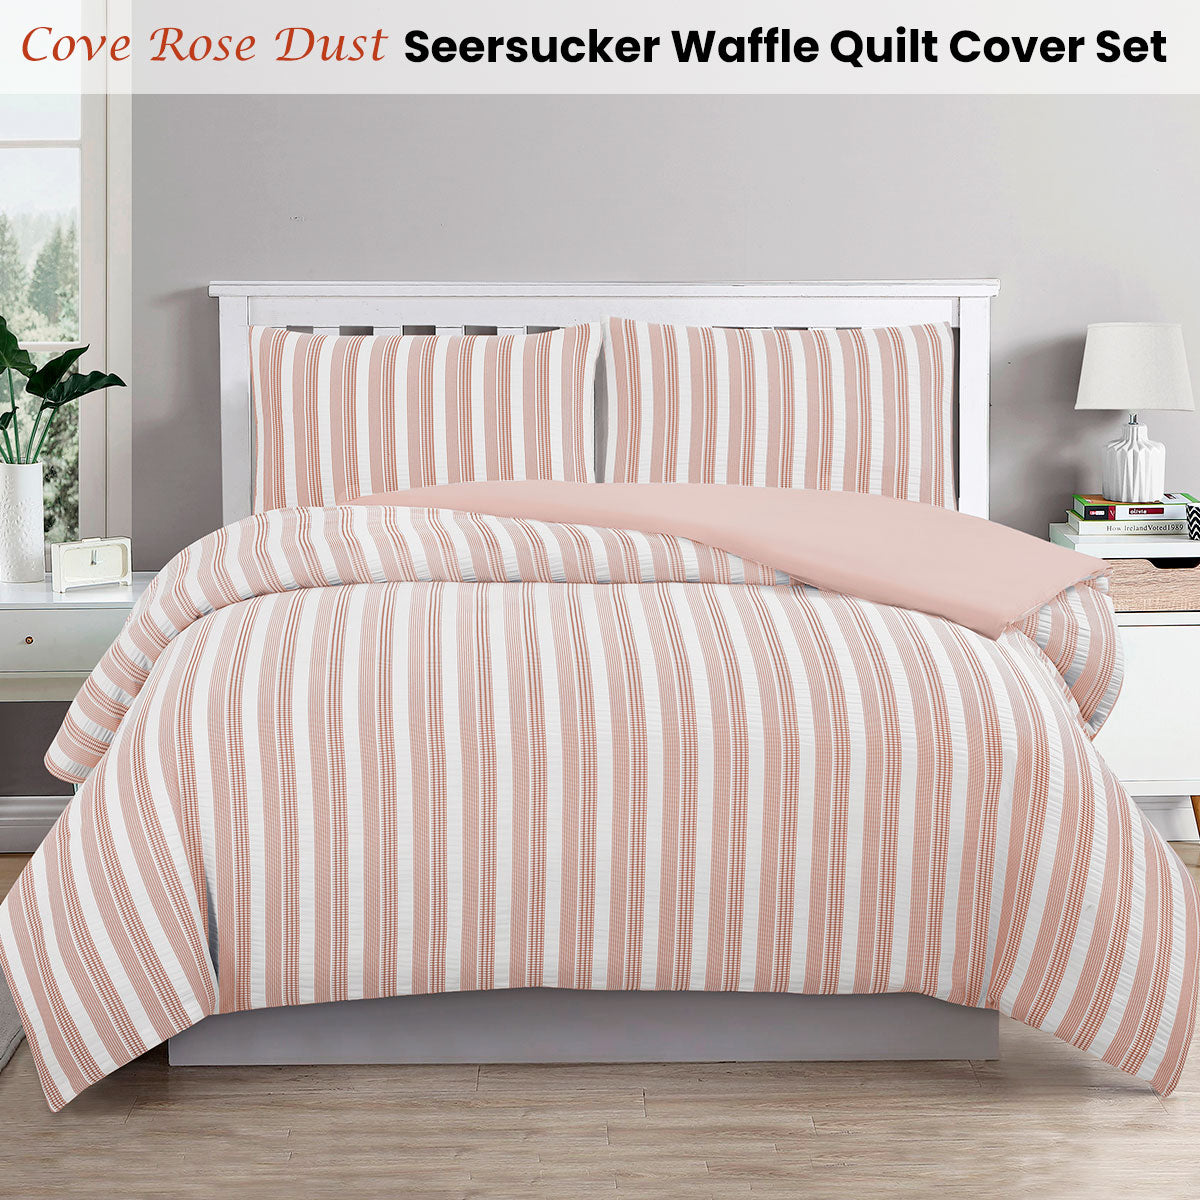 SINGLE 3-Piece Seersucker Waffle Quilt Cover Set - Peach